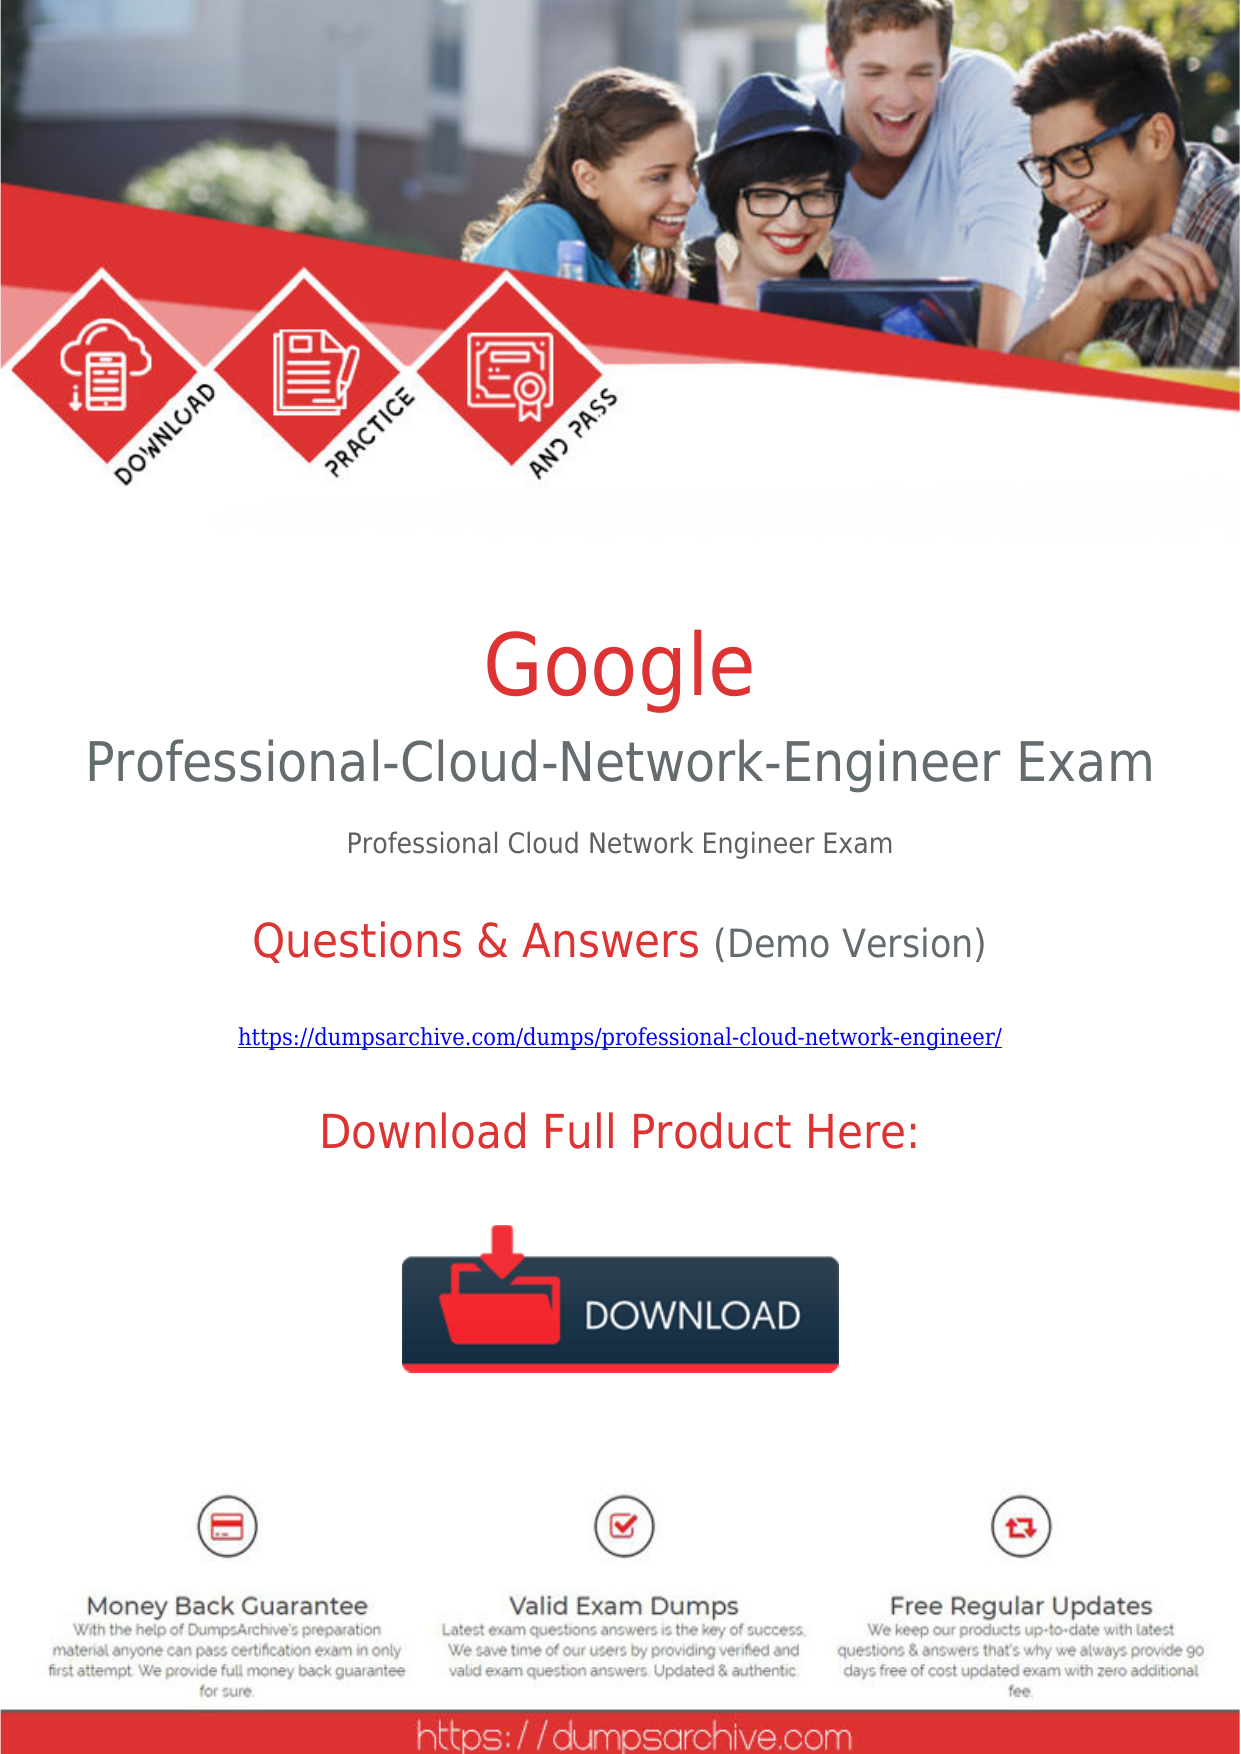 Valid Professional-Data-Engineer Exam Experience